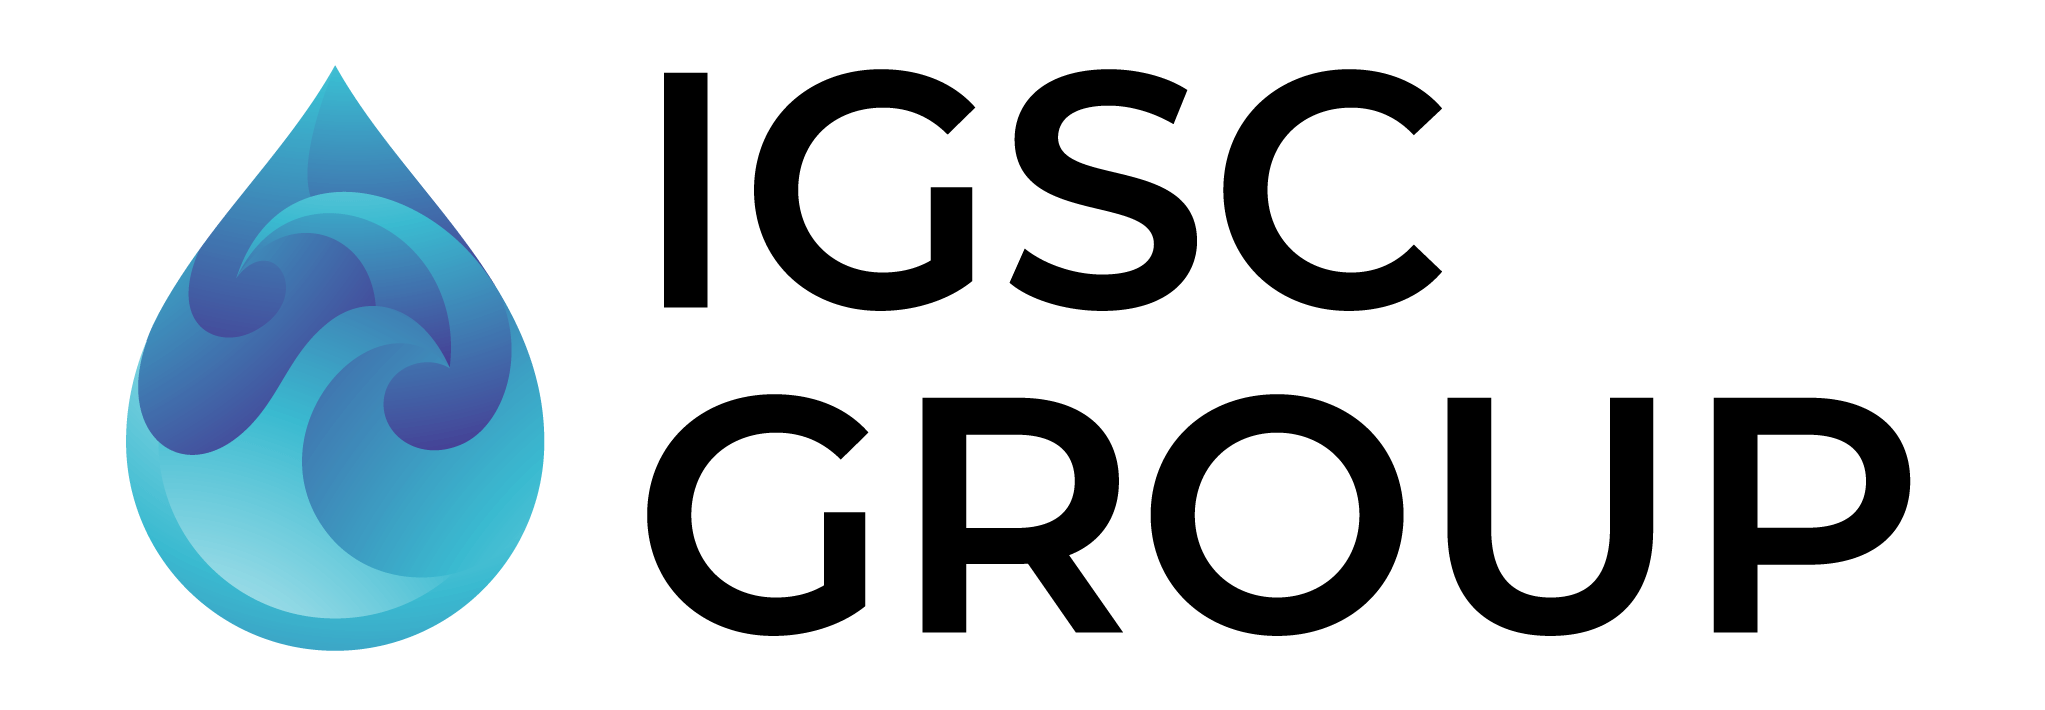 IGSC Group